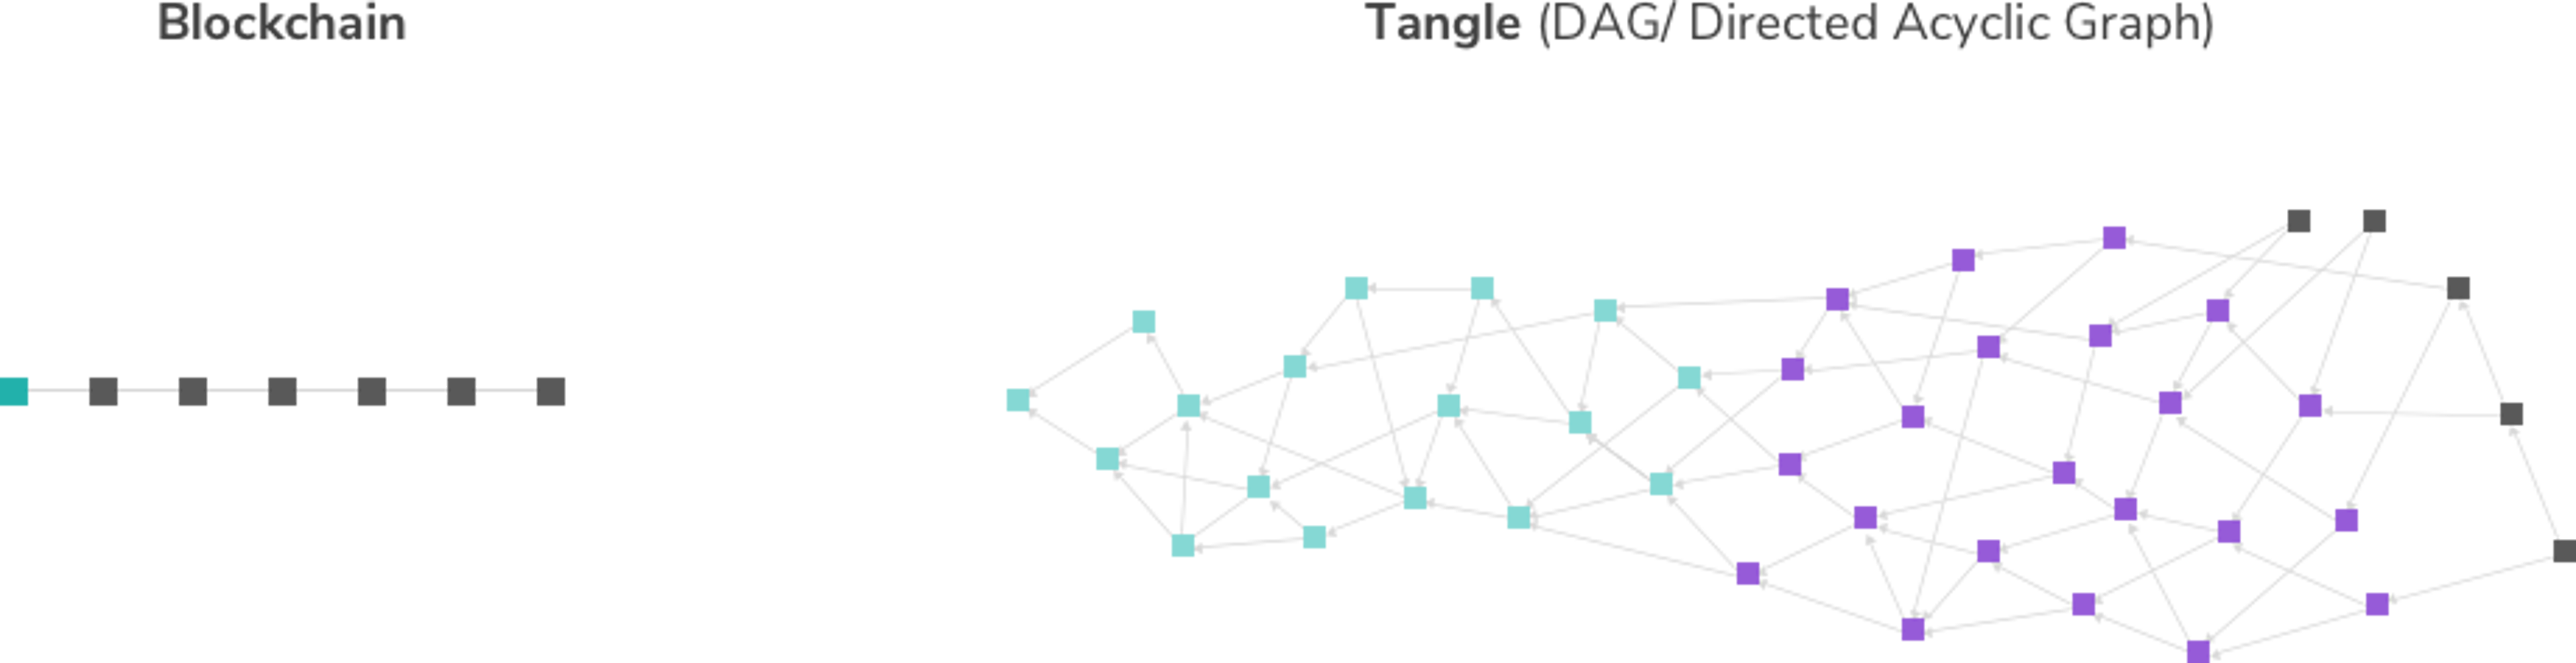 Blockchain vs. Tangle